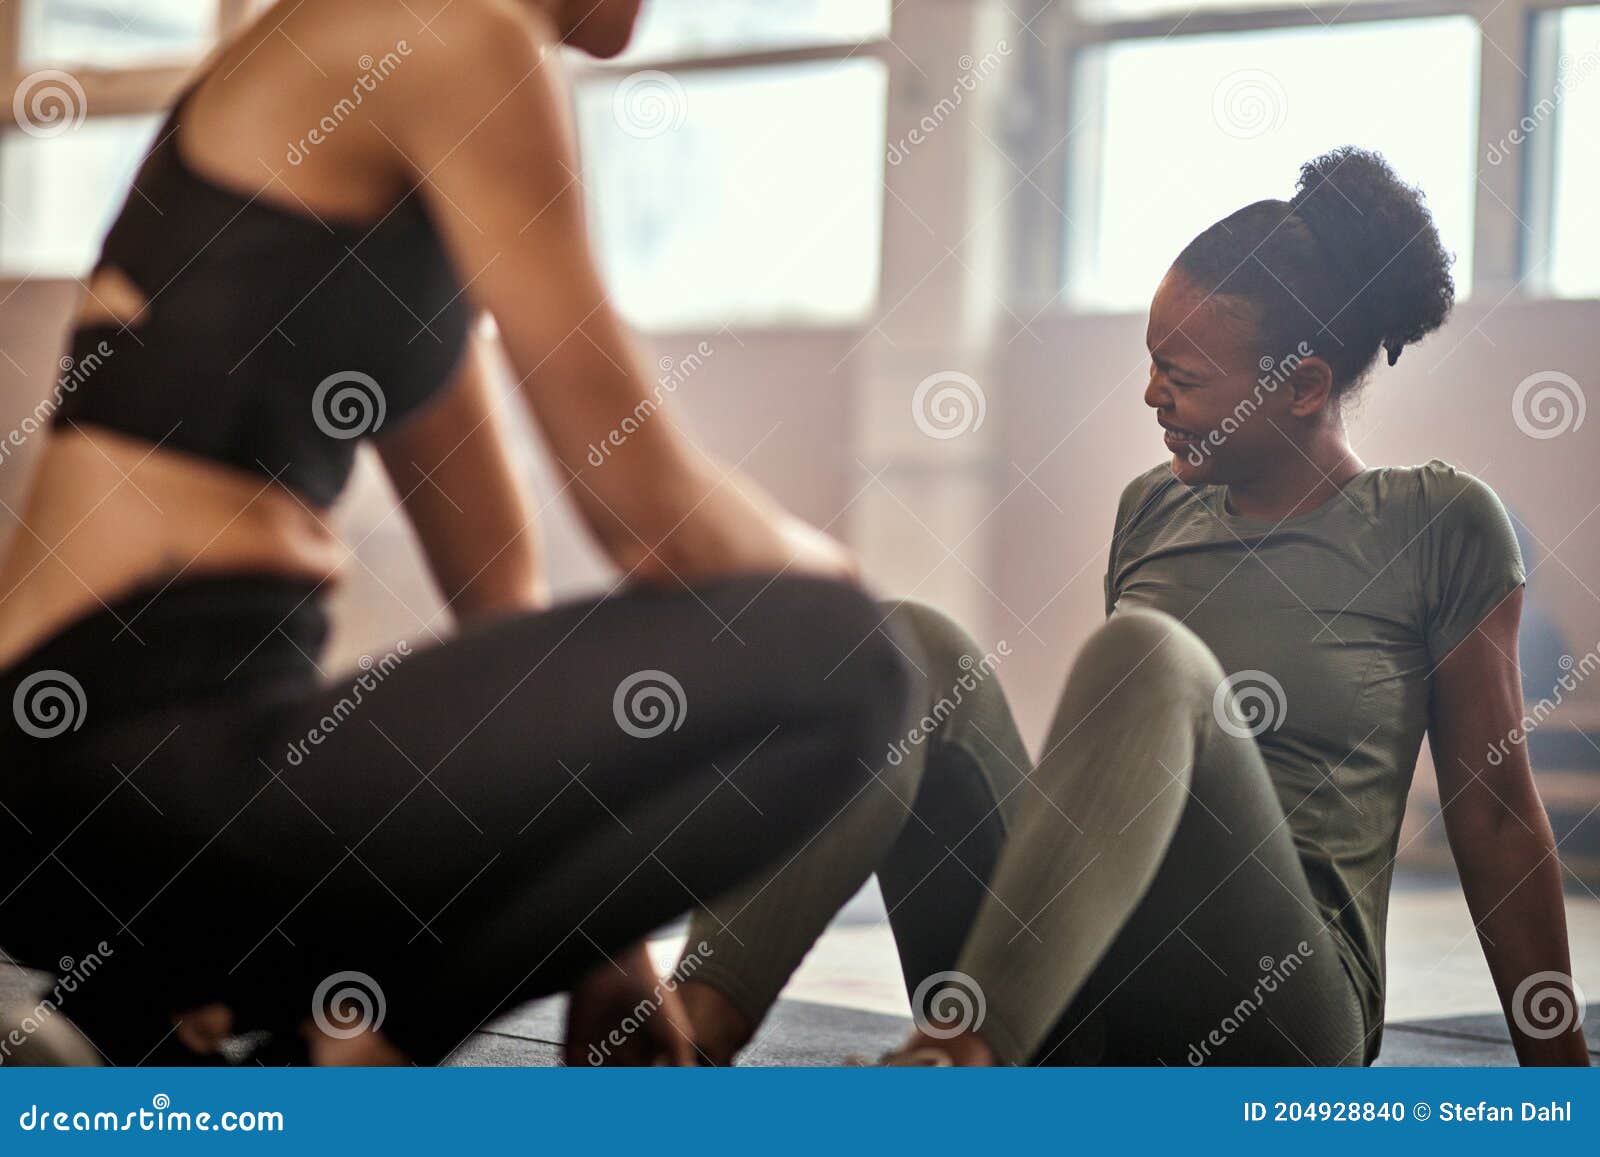 Black girl makes gym buddy